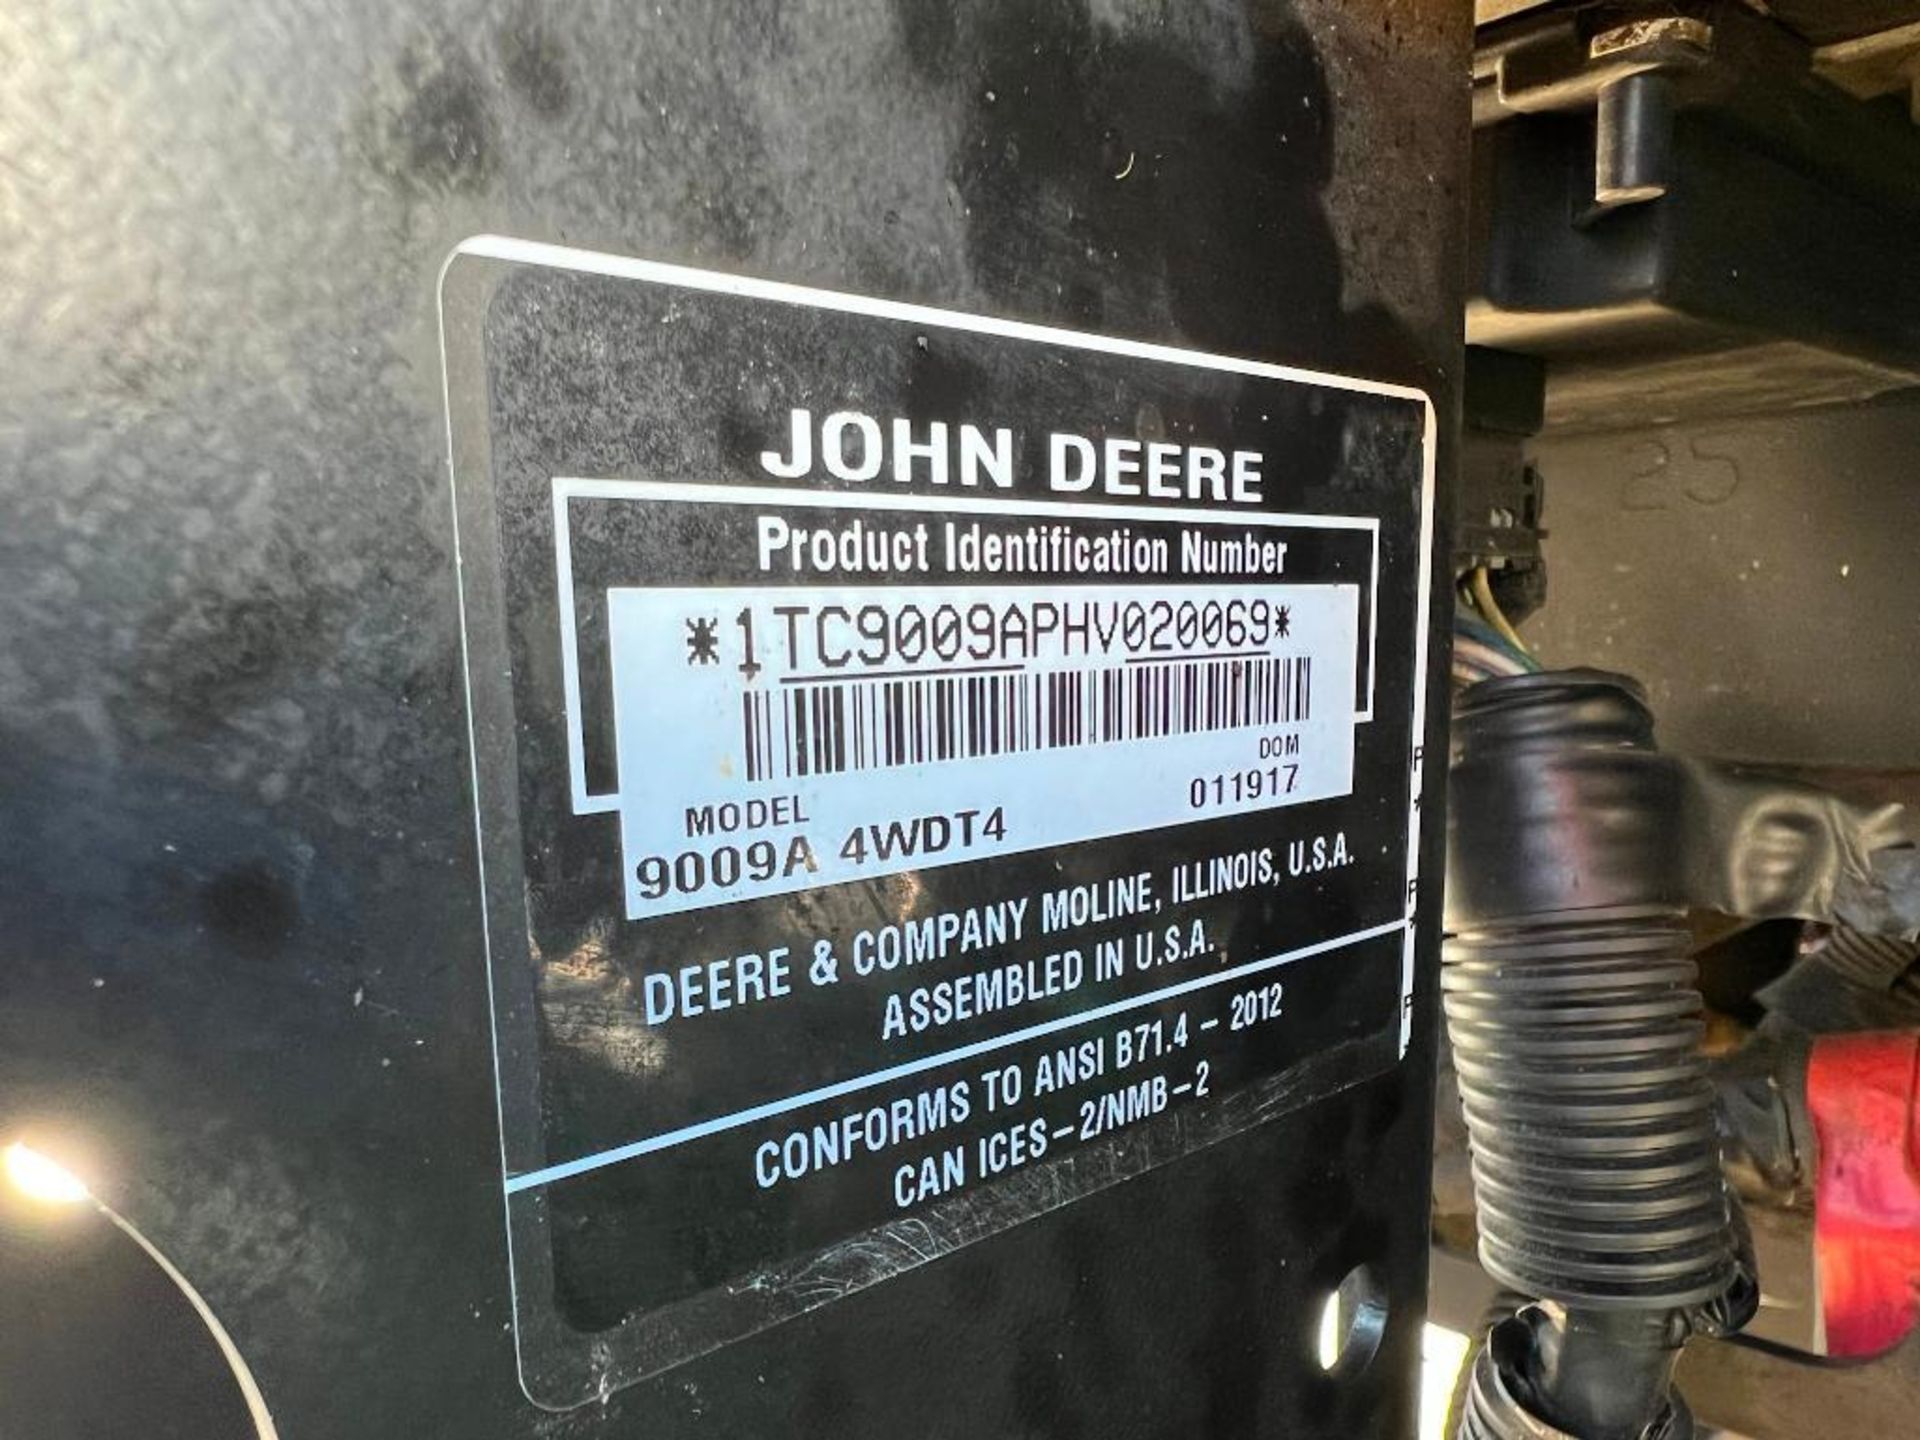 2017 John Deere Model 9009A 4WD T4 TerrainCut Rough Mower, Product ID #1TC9009APHV020069, DOM #04131 - Image 6 of 21